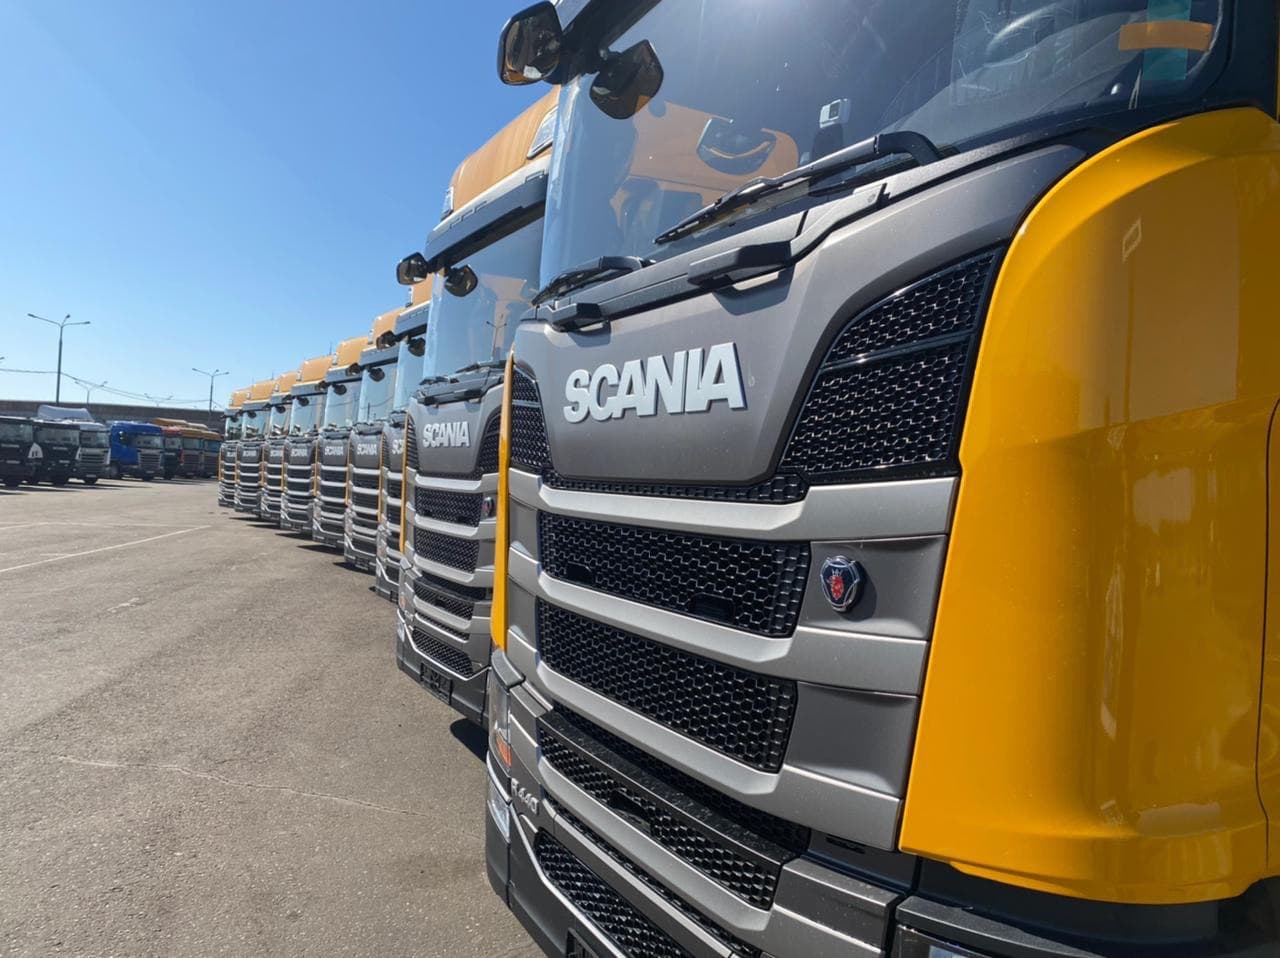 Scania.jpg